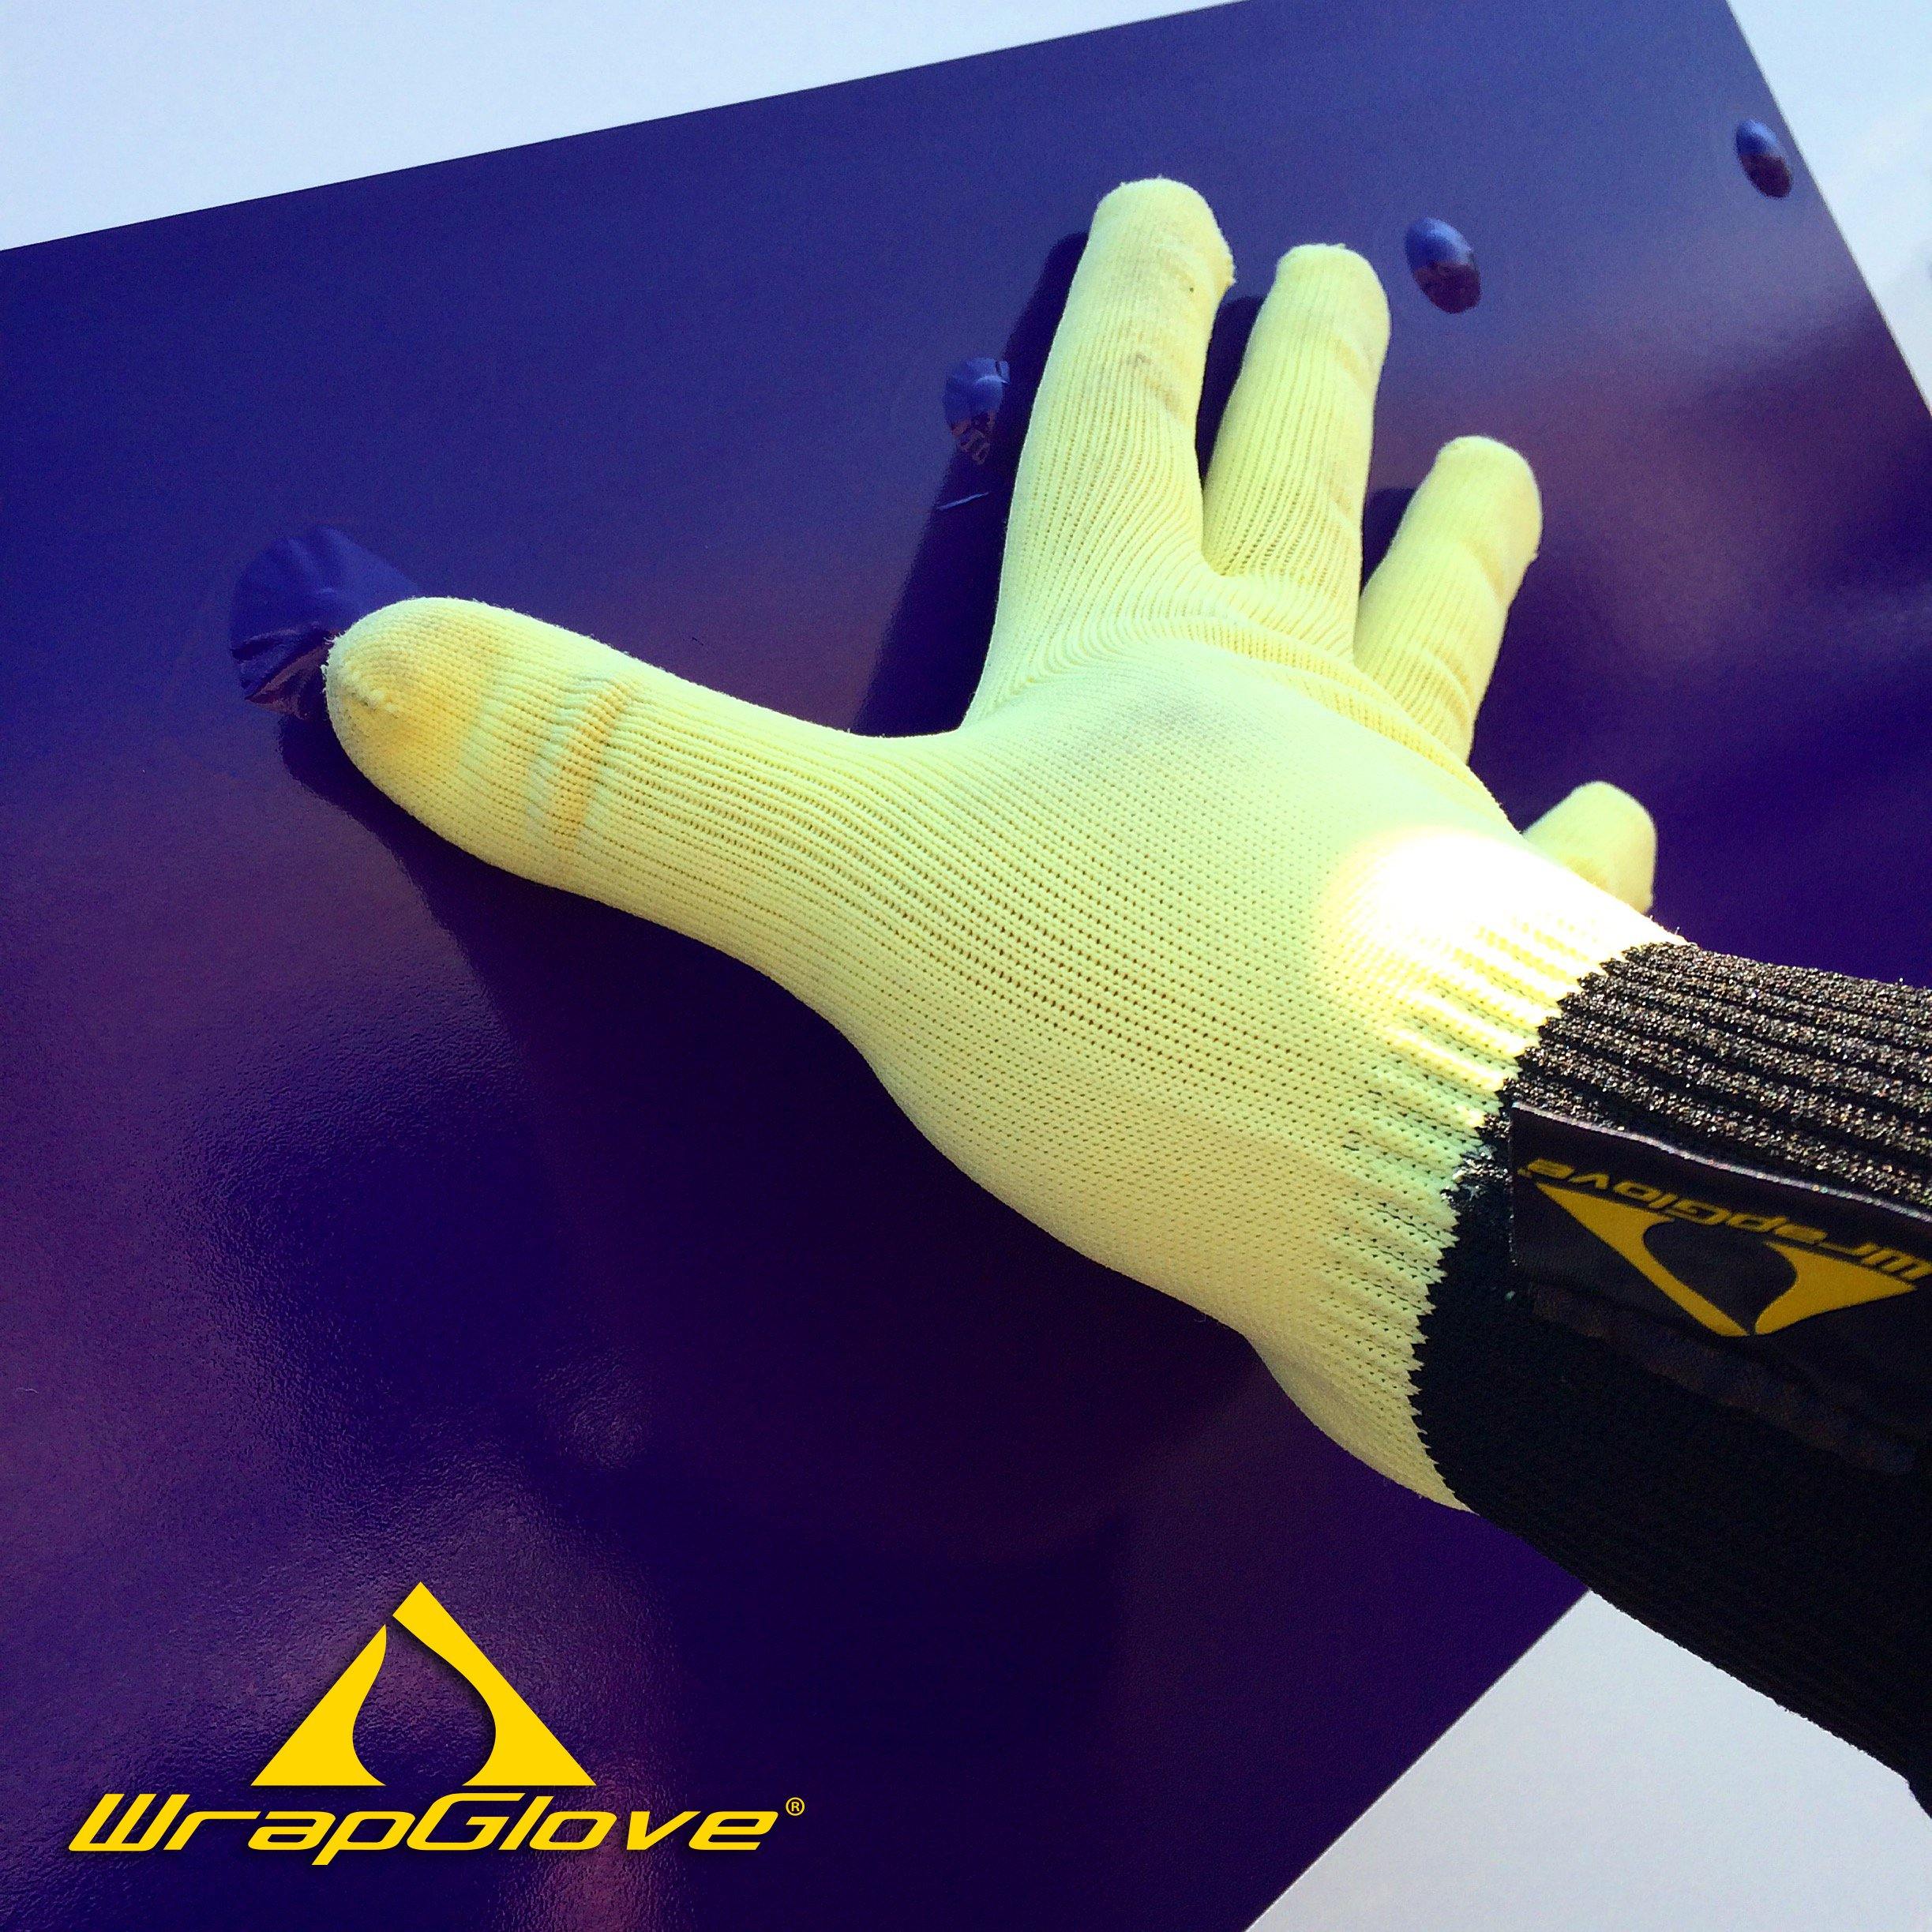 HEATGlove™ Tint Glove - WrapGlove®